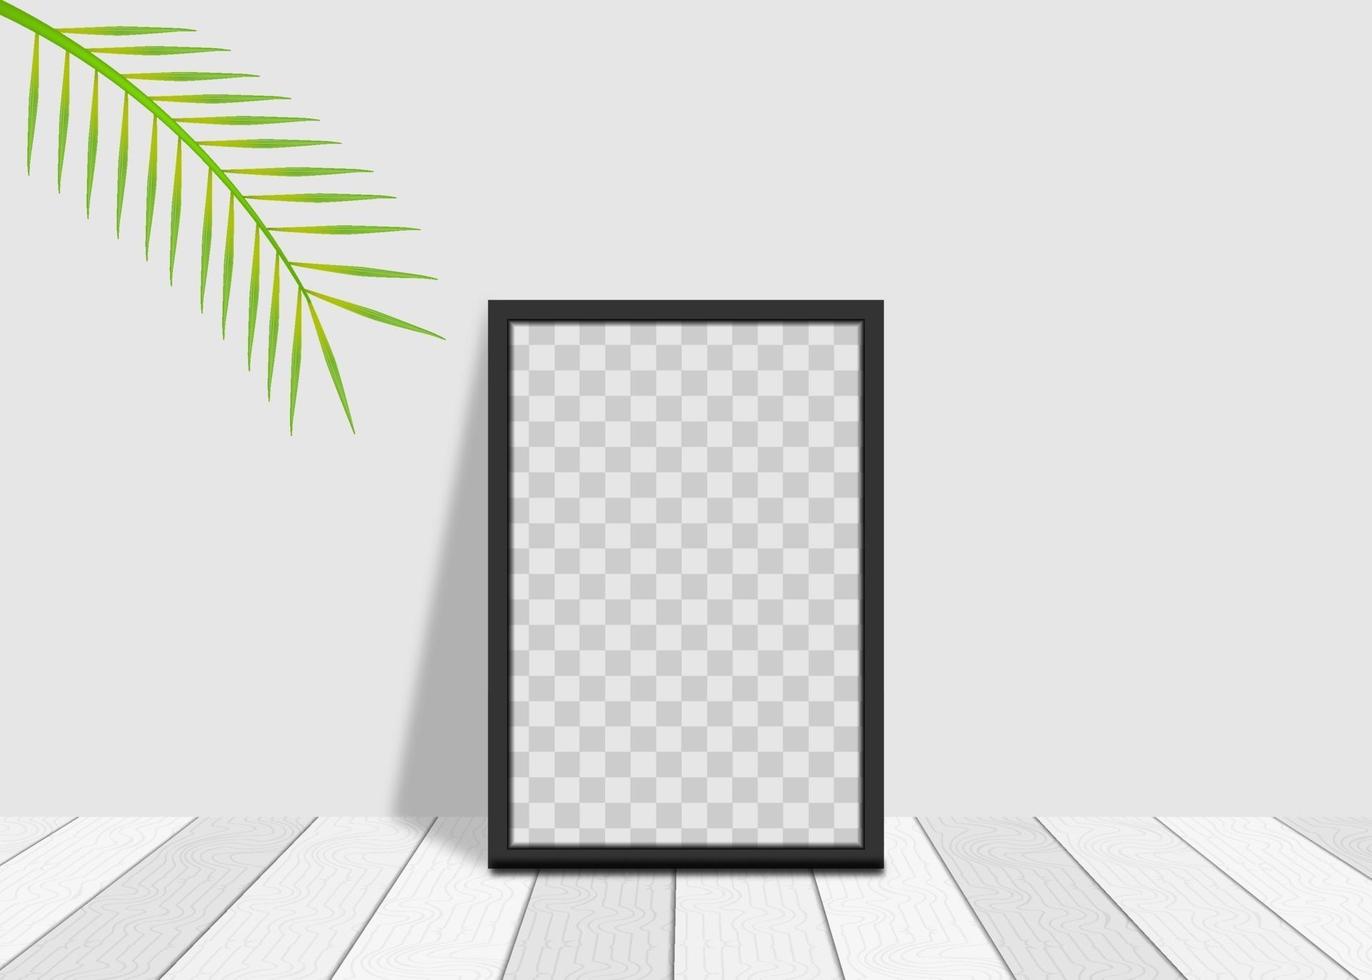 3D realistic square frame mockup vector